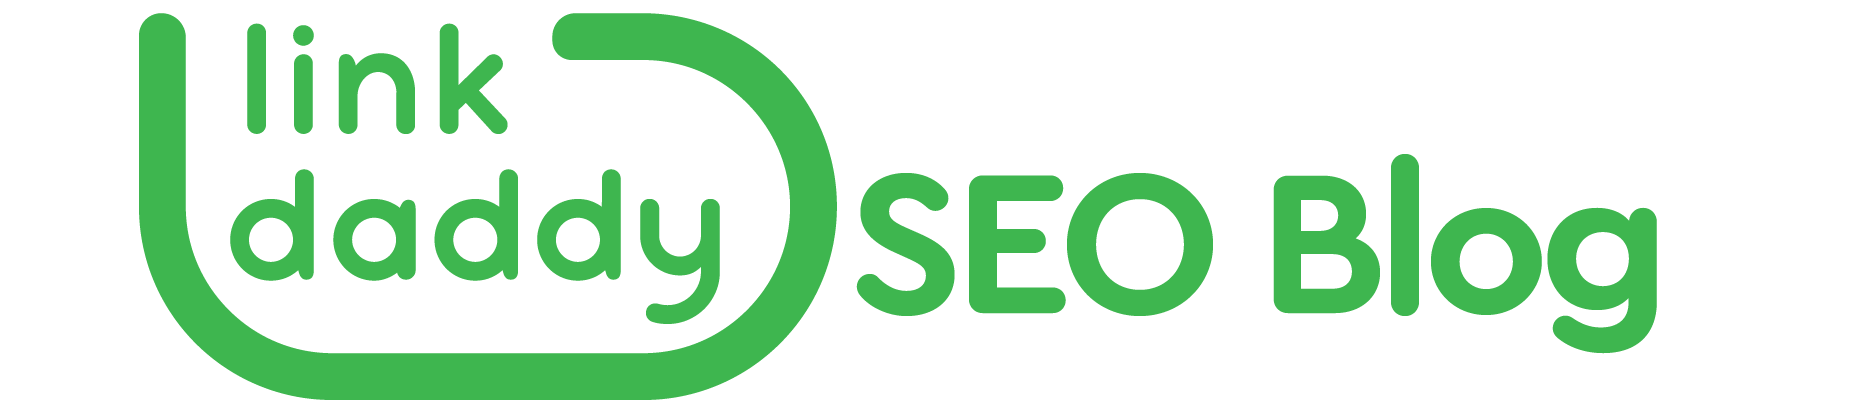 https://storage.googleapis.com/cloudsites/seo-services/865d6a4qx/img/cropped-linkdaddy-seoblog-logo.png